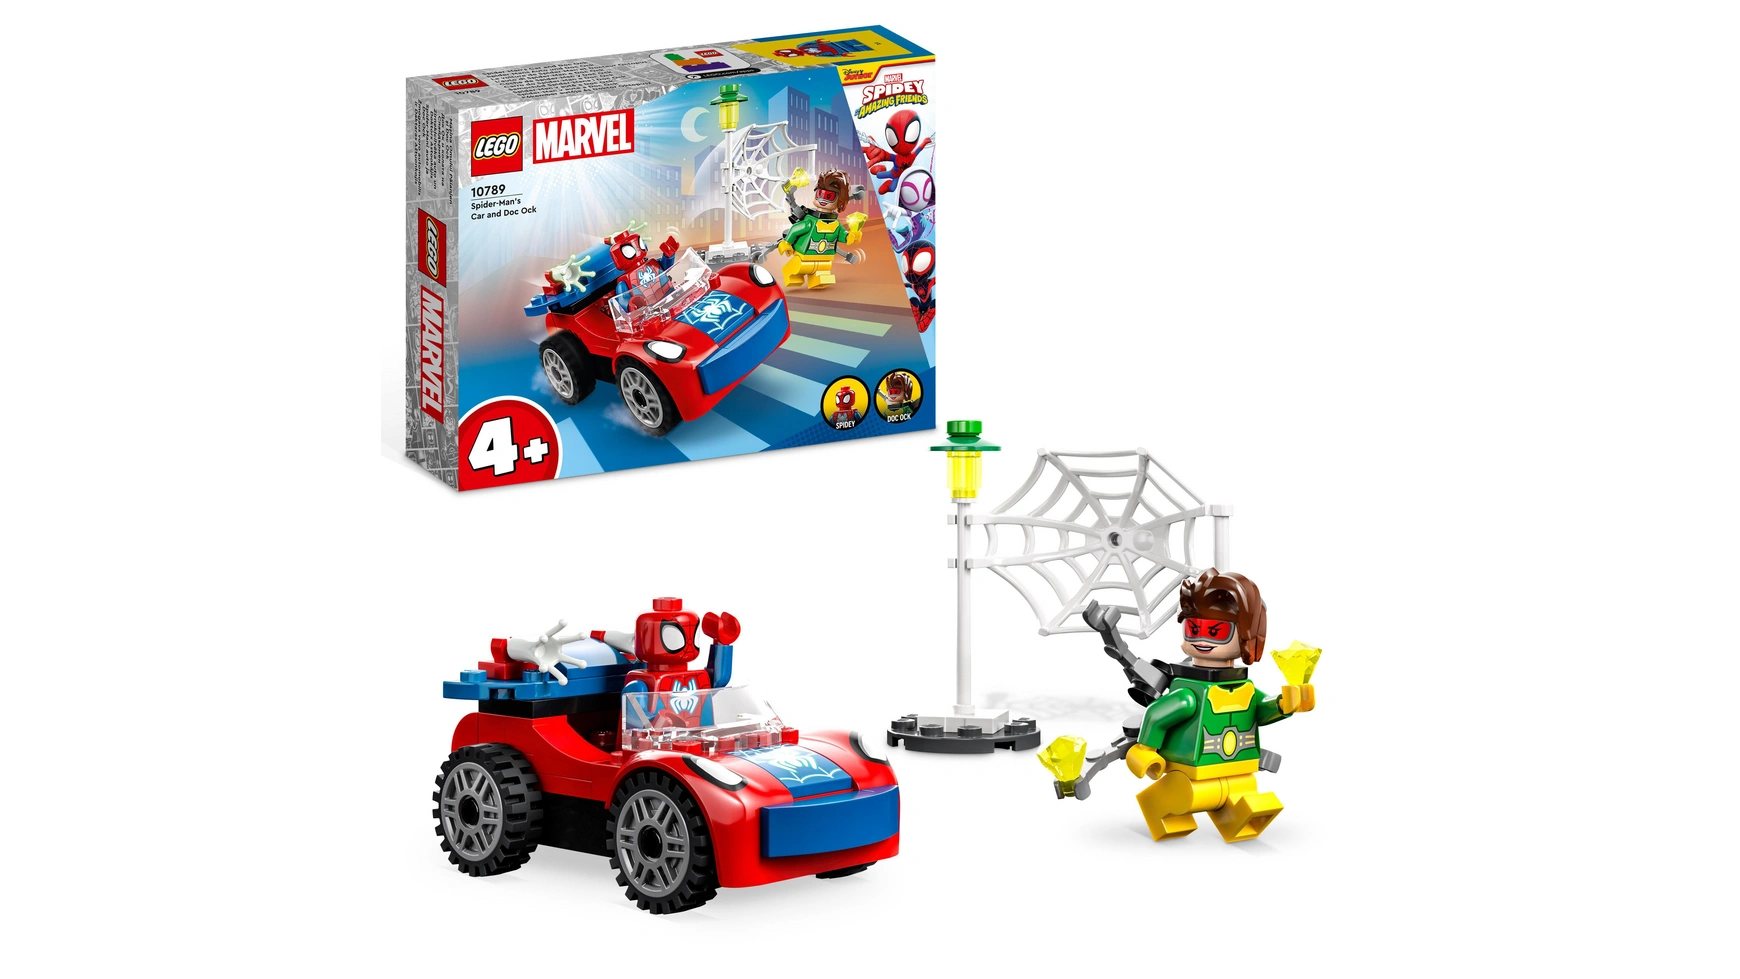 Lego Marvel Набор Машина Человека-паука и Дока Ока-Паука, 4+ игрушки конструктор lego marvel super heroes 10789 автомобиль человека паука и док ок 48 дет